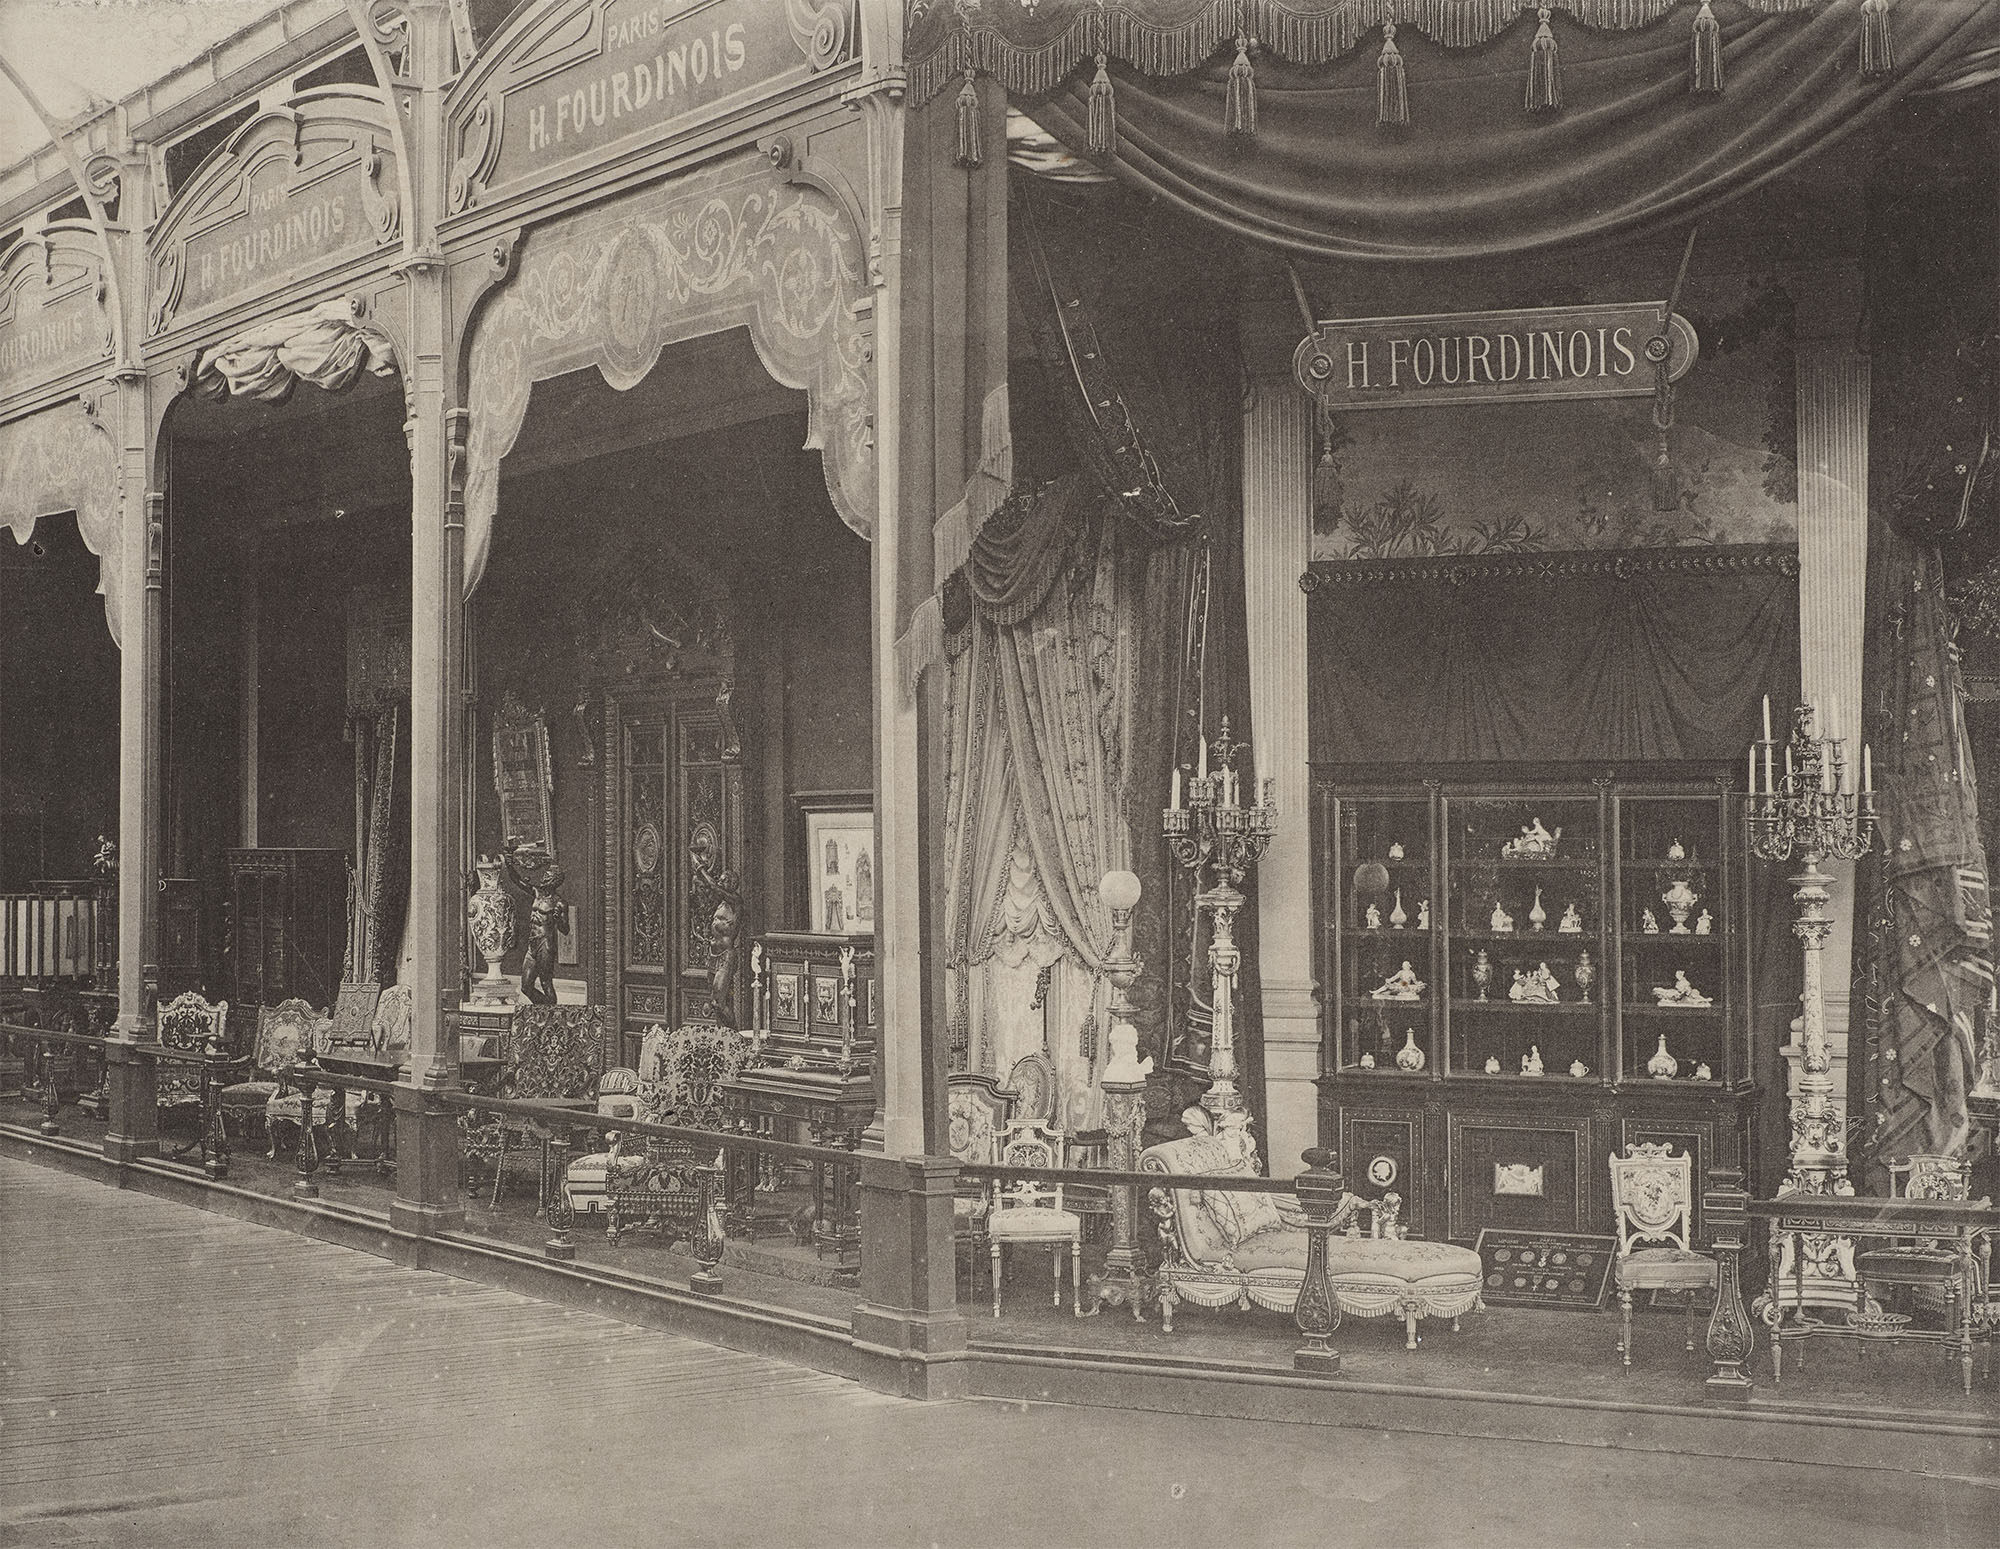 Stand Fourdinois Exposition Universelle de 1878